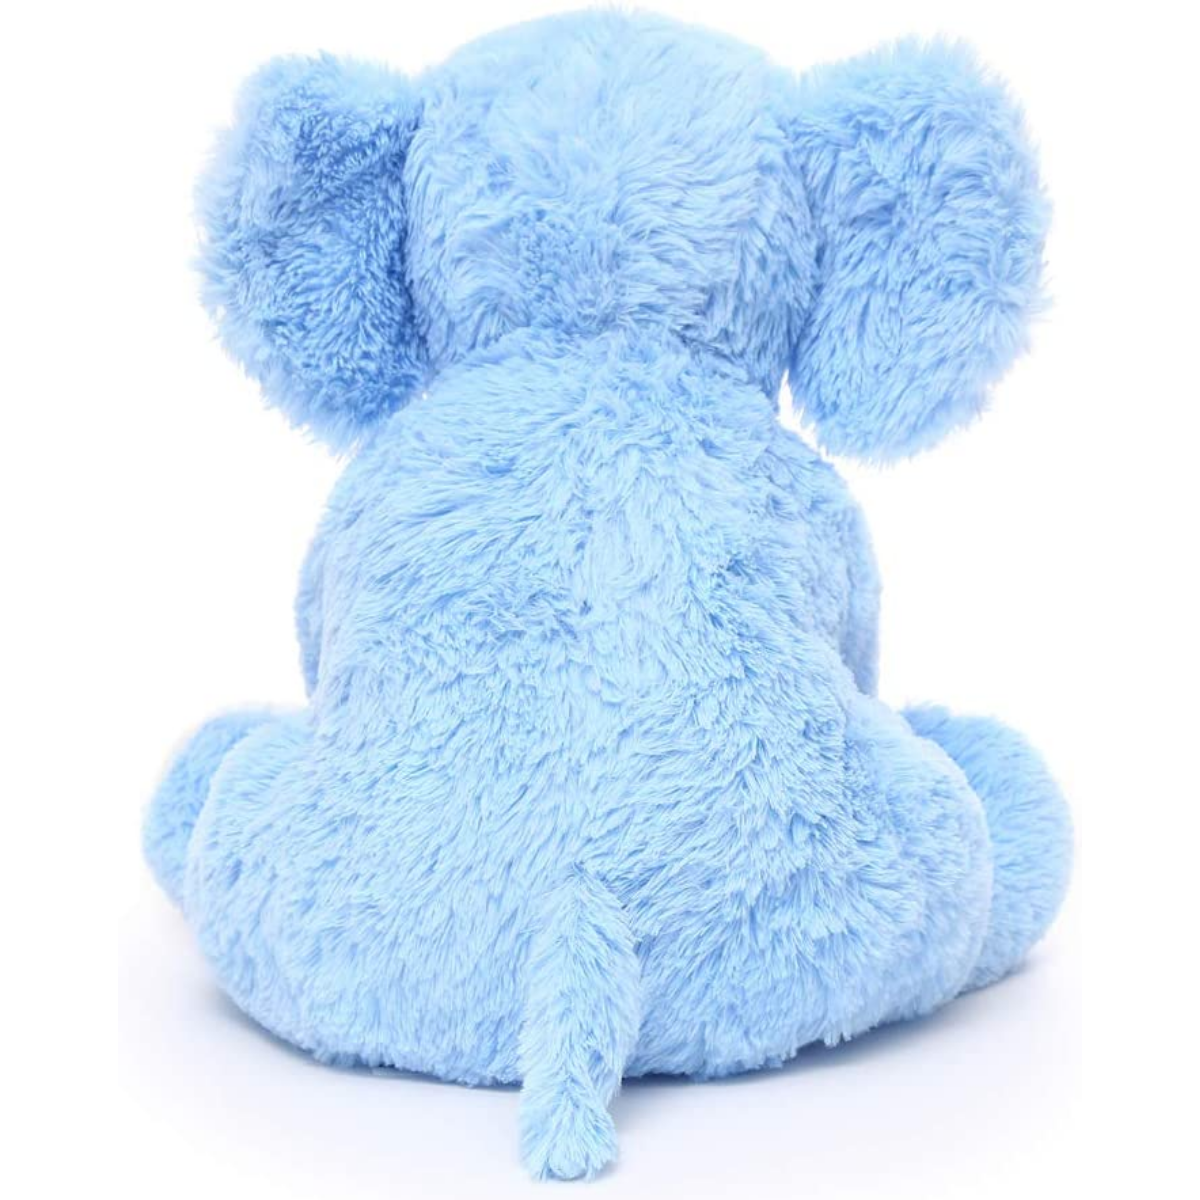 Elephant Stuffed Animal Toy, Multicolor, 19 Inches - MorisMos Plush Toys